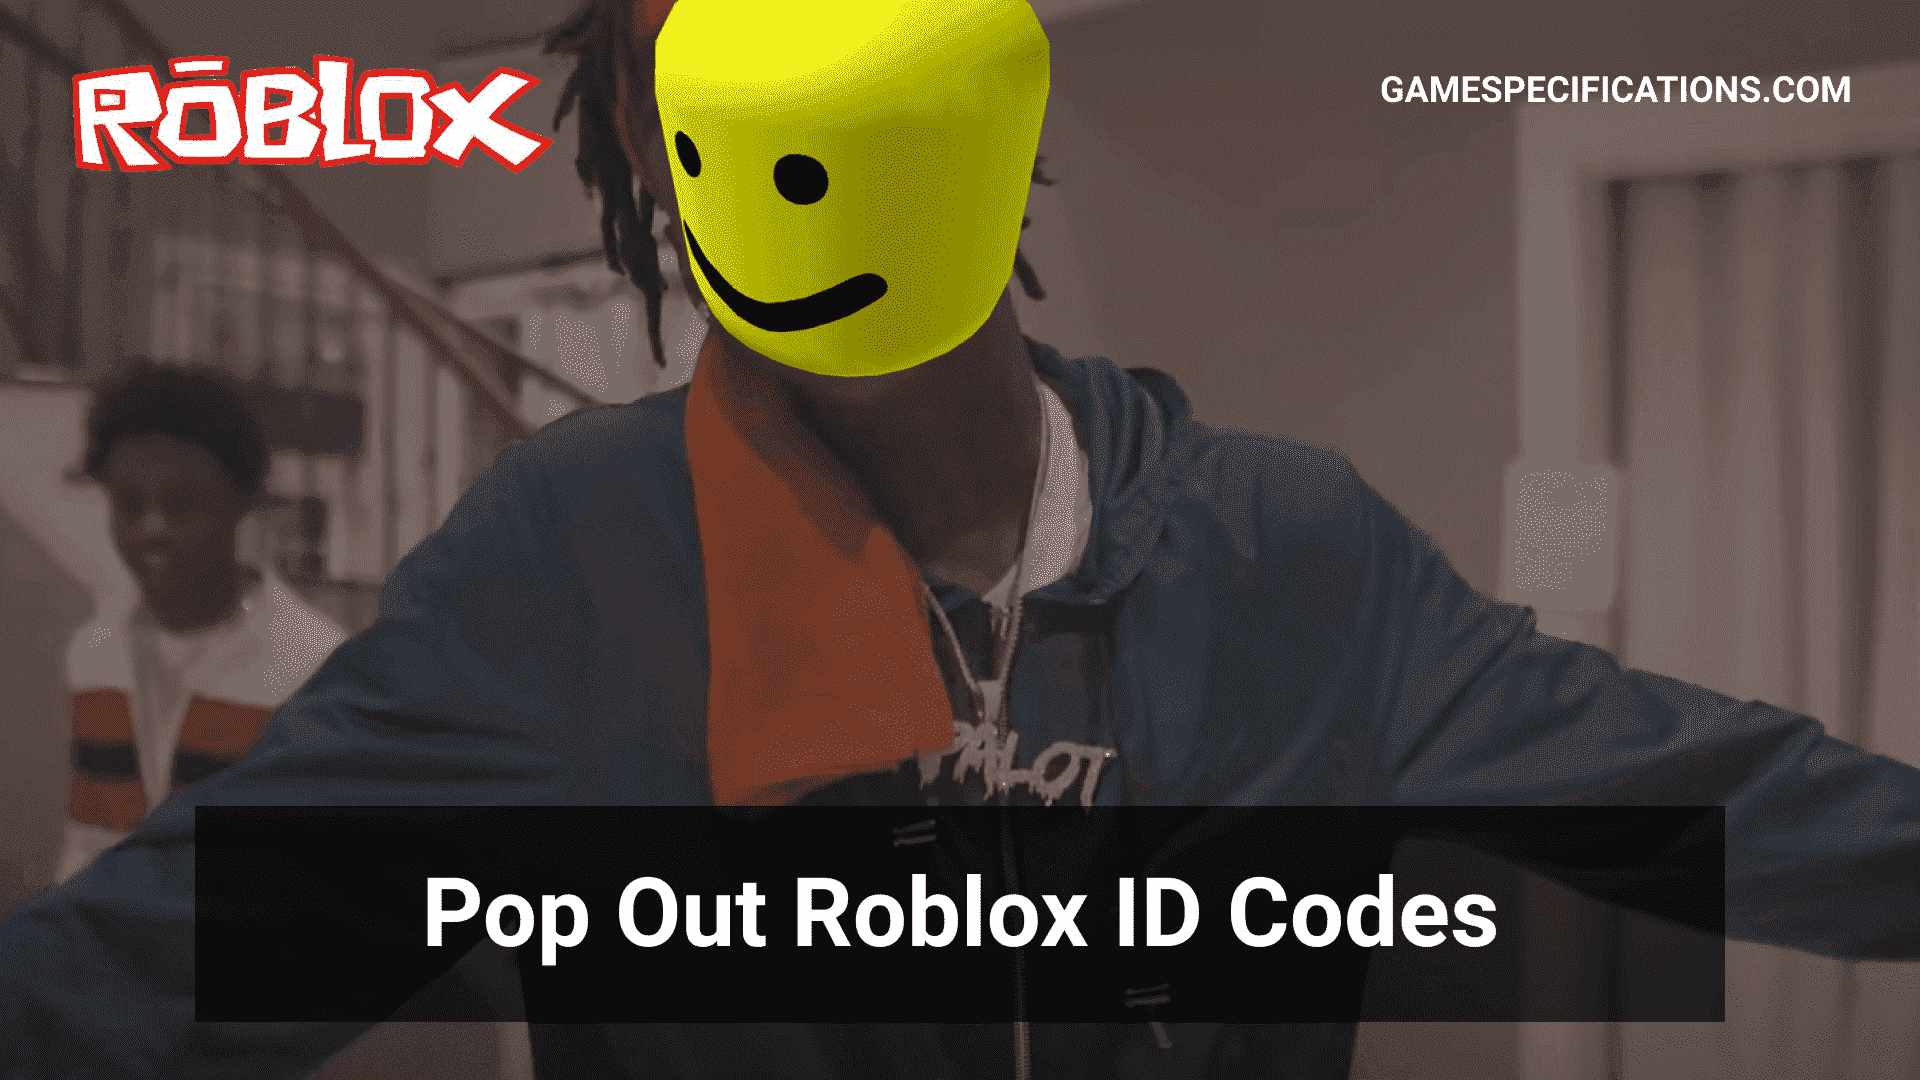 Roblox Music Codes Rap 2021 December